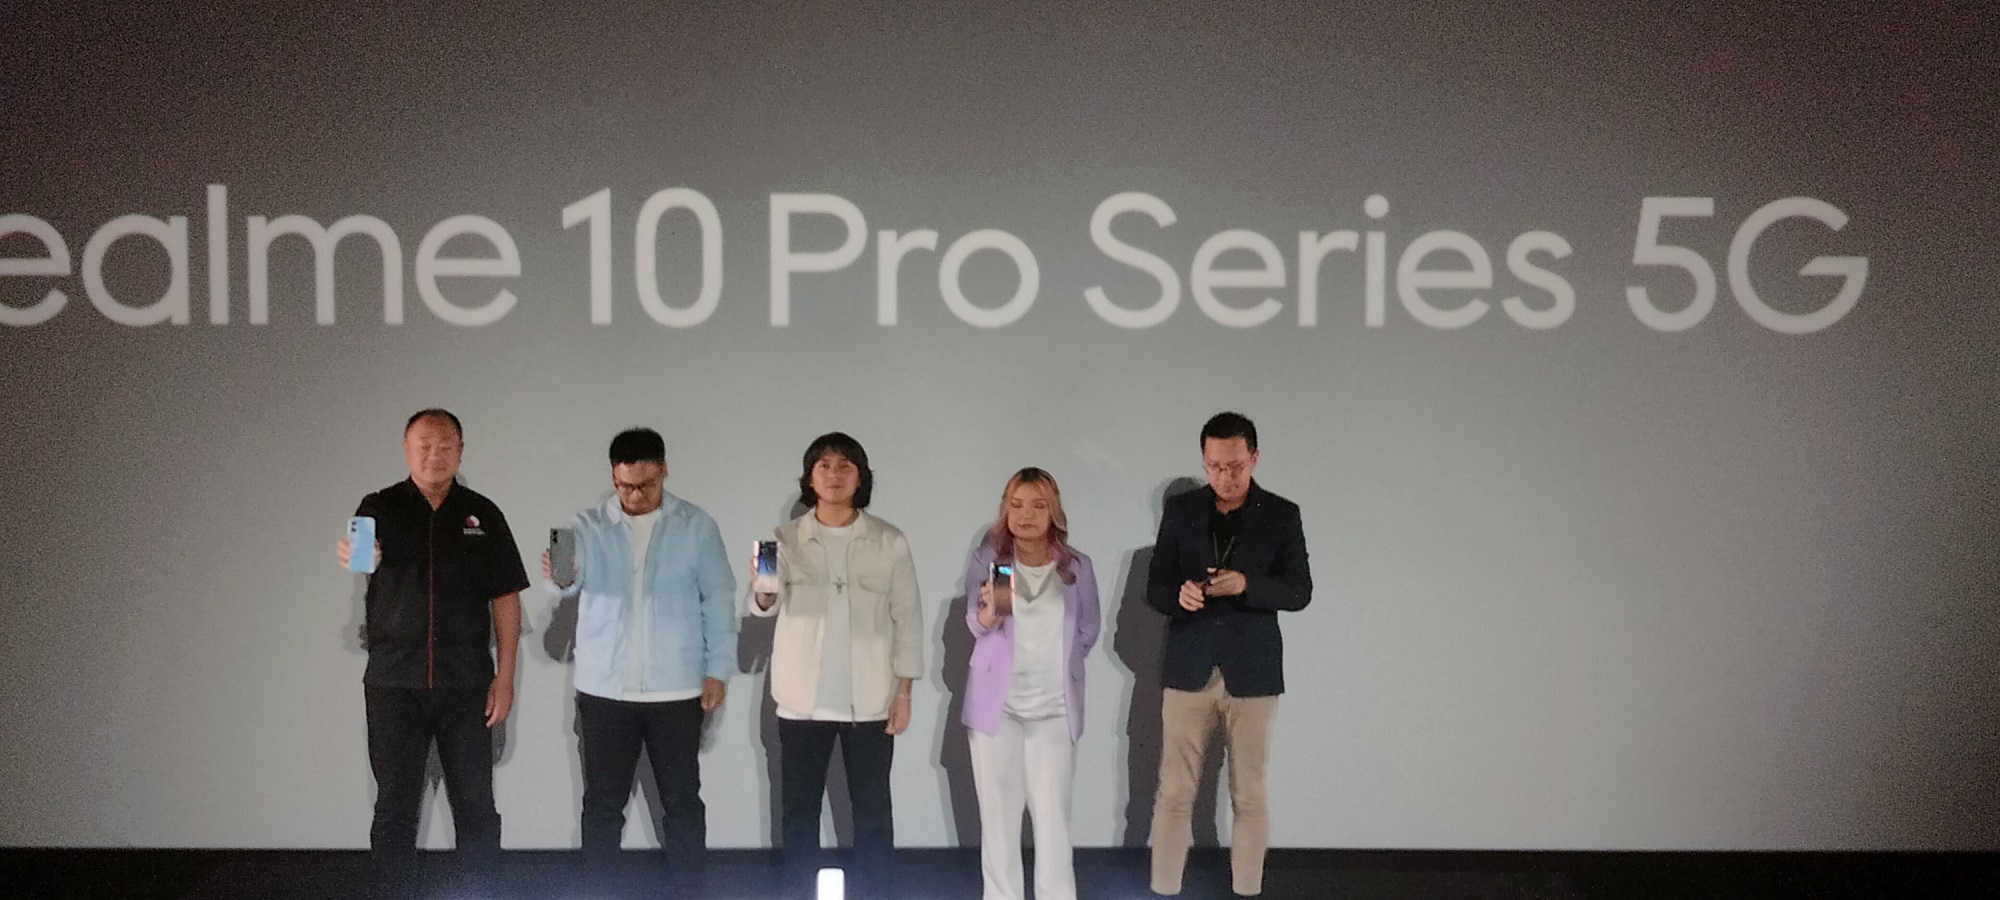 Realme 10 Pro Series